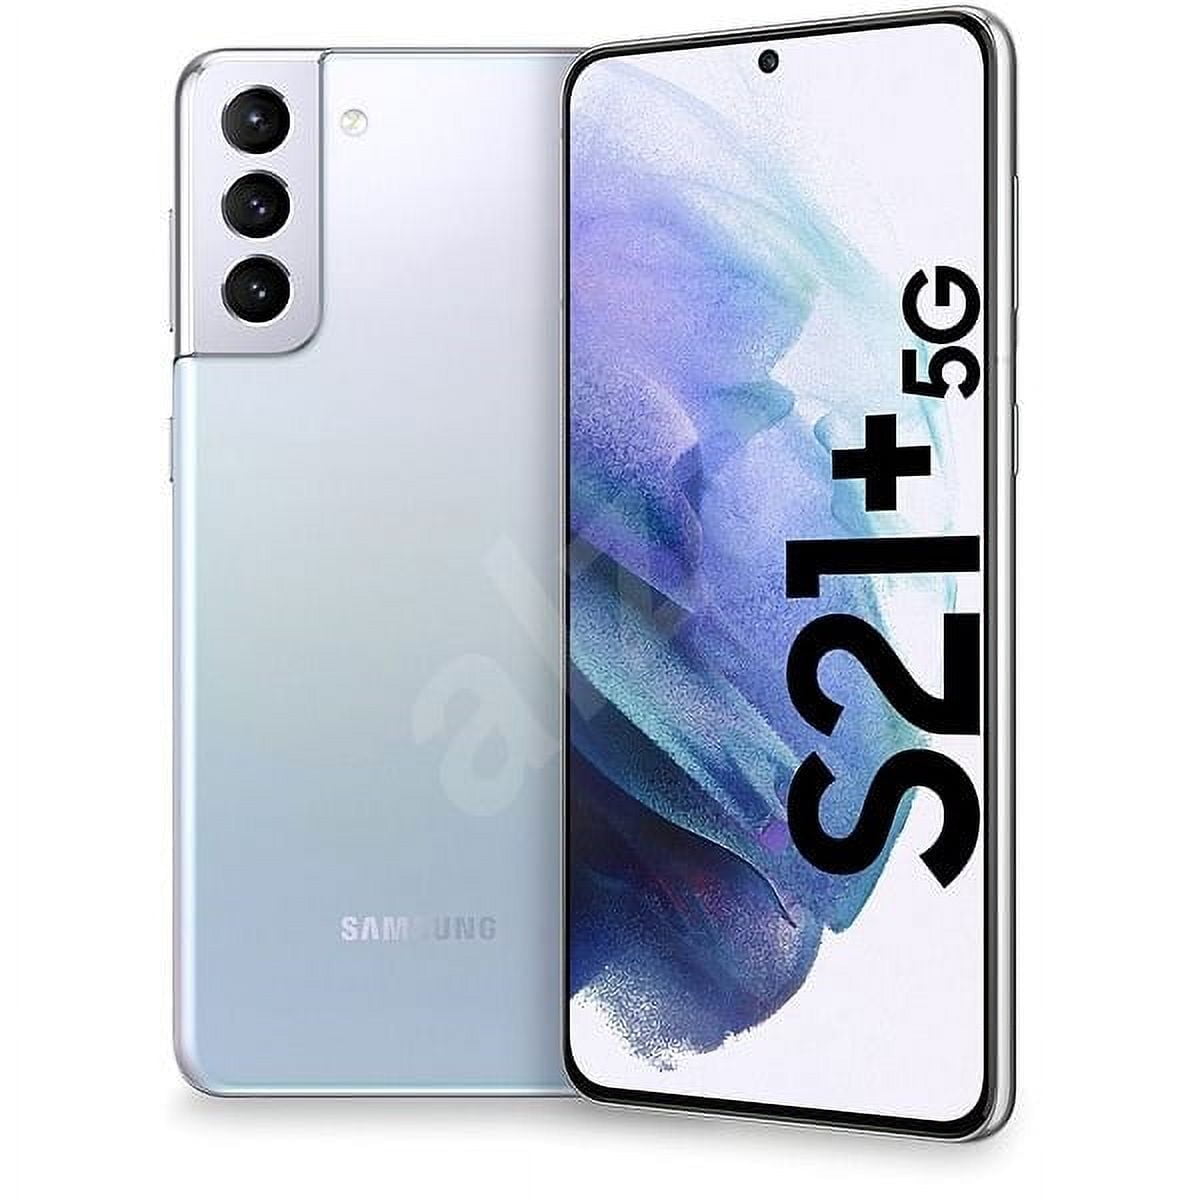 Samsung Galaxy S21+ Plus 5G 128/256GB SM-G996U1 US Model Unlocked Cell  Phones - Very Good Condition